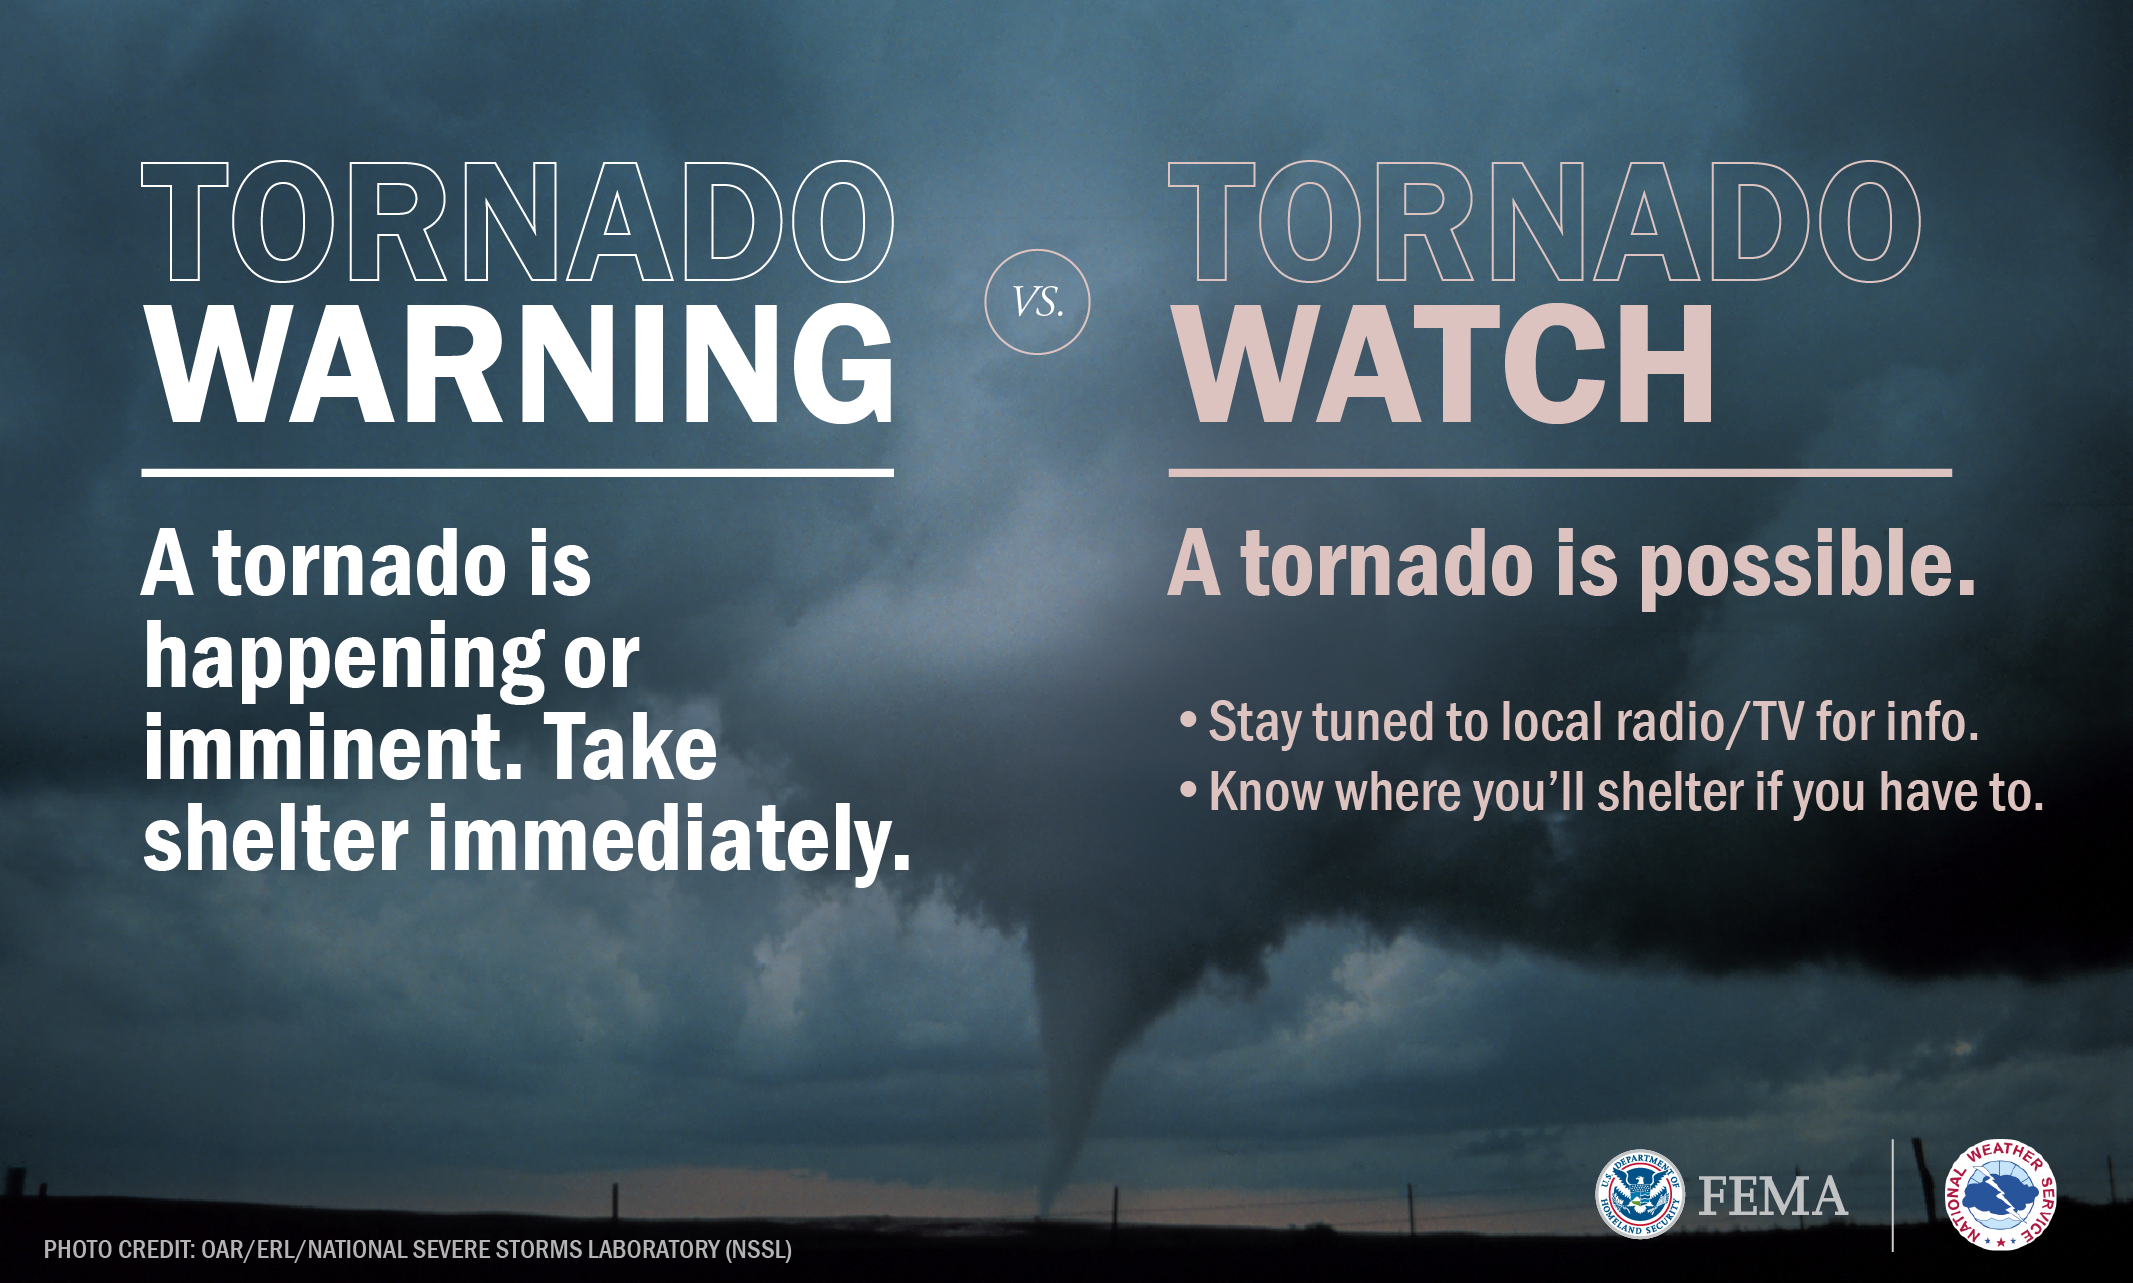 Tornado warning vs tornado watch